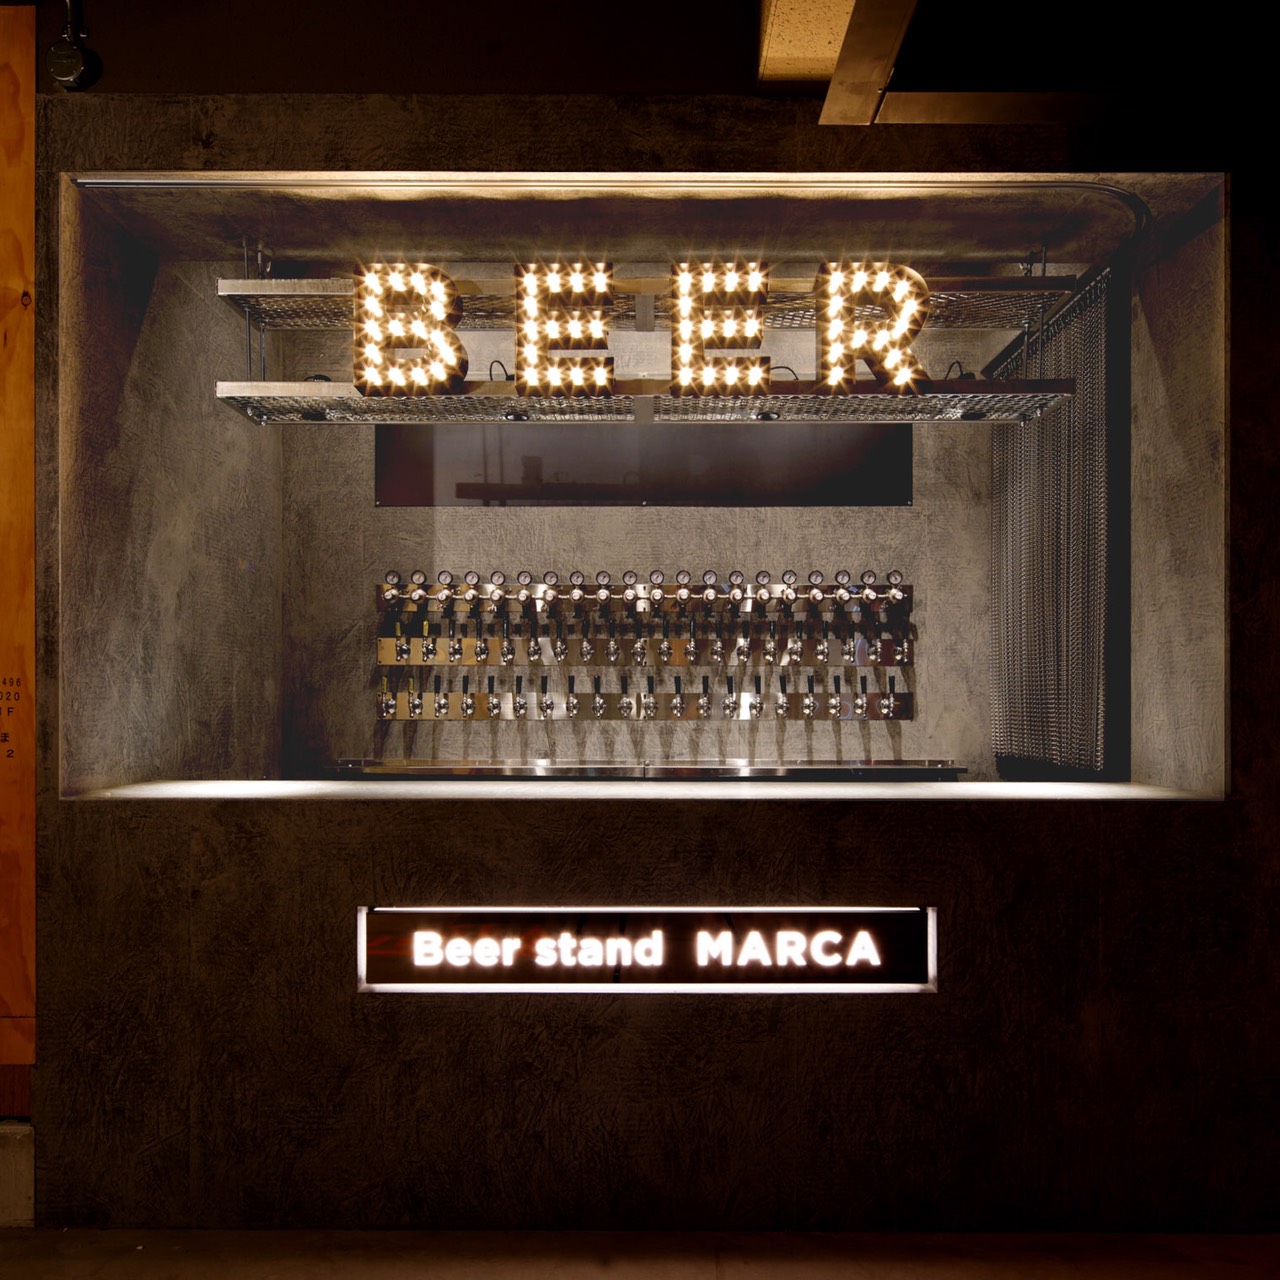 Beer Stand Marca Beer On Tap